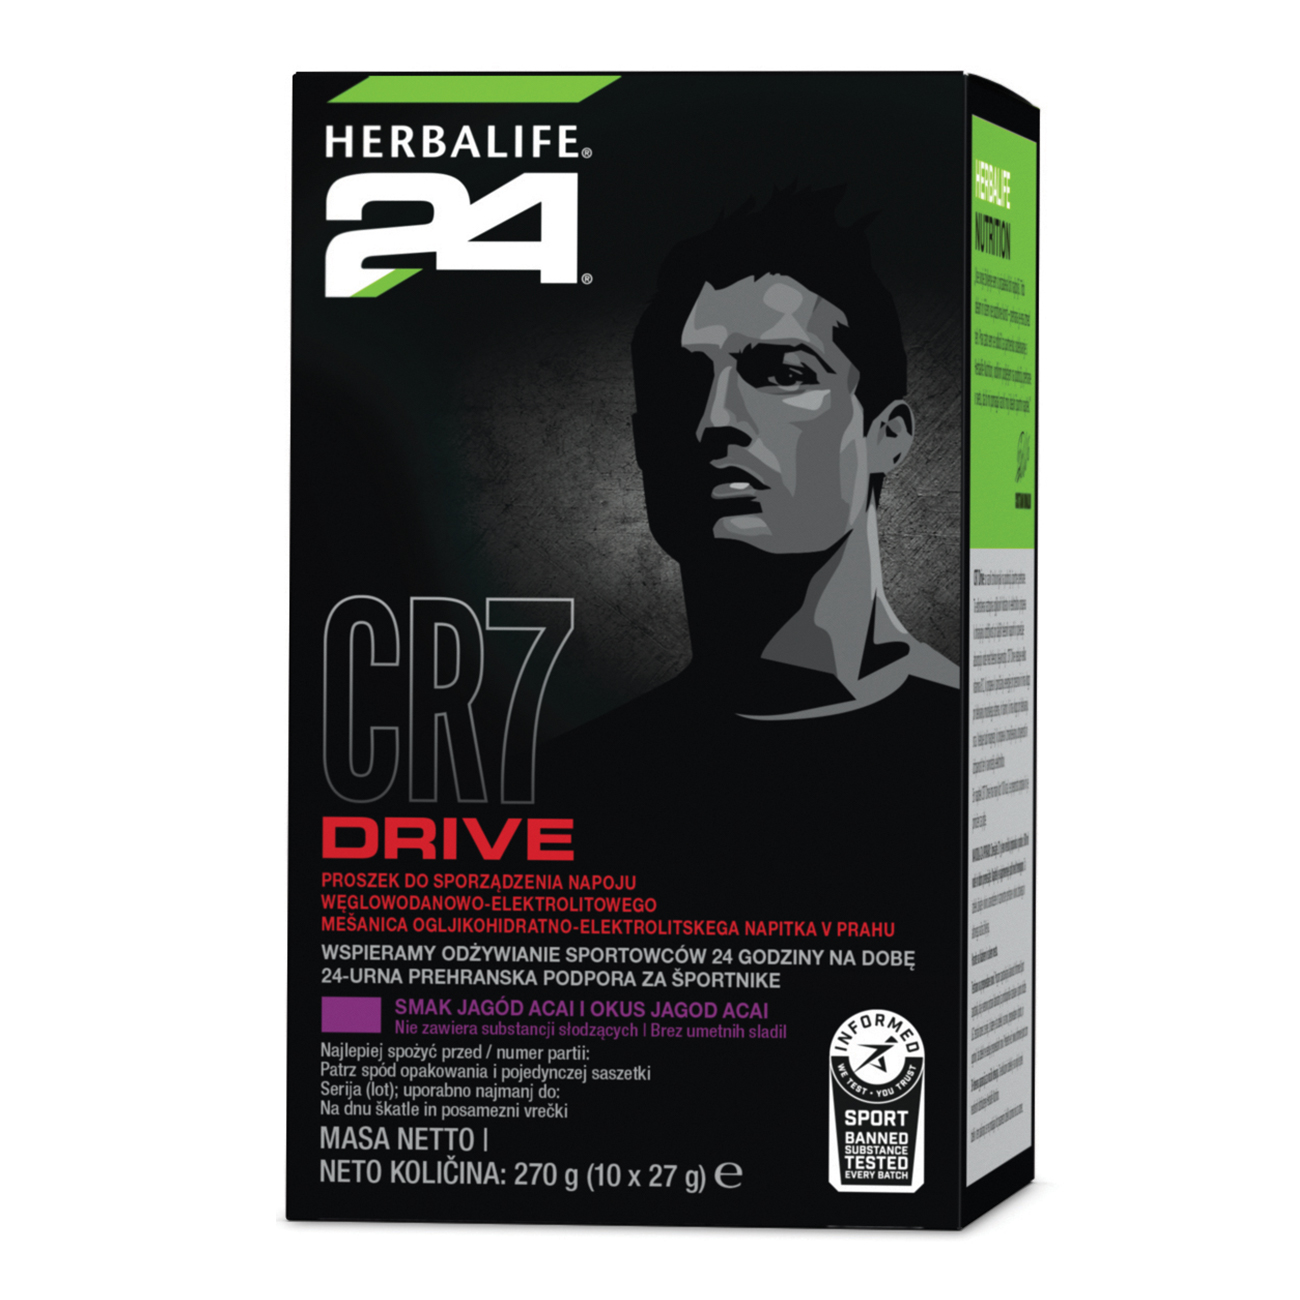 Herbalife24® CR7 Drive ogljikohidratno-elektrolitski napitek okus jagod acai slika izdelka